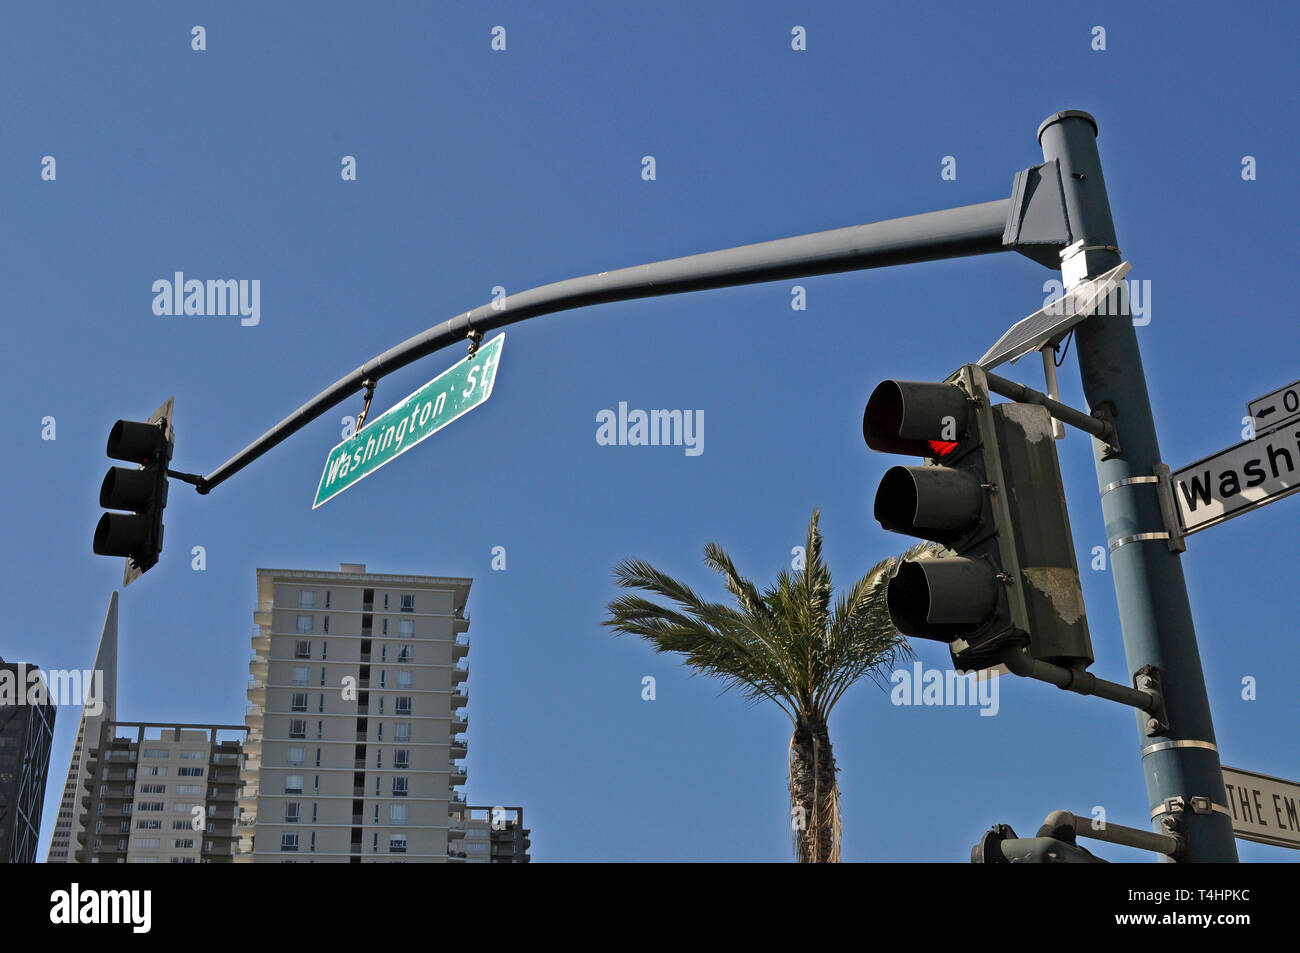 Washington Street sign in San Francisco, California Stock Photo